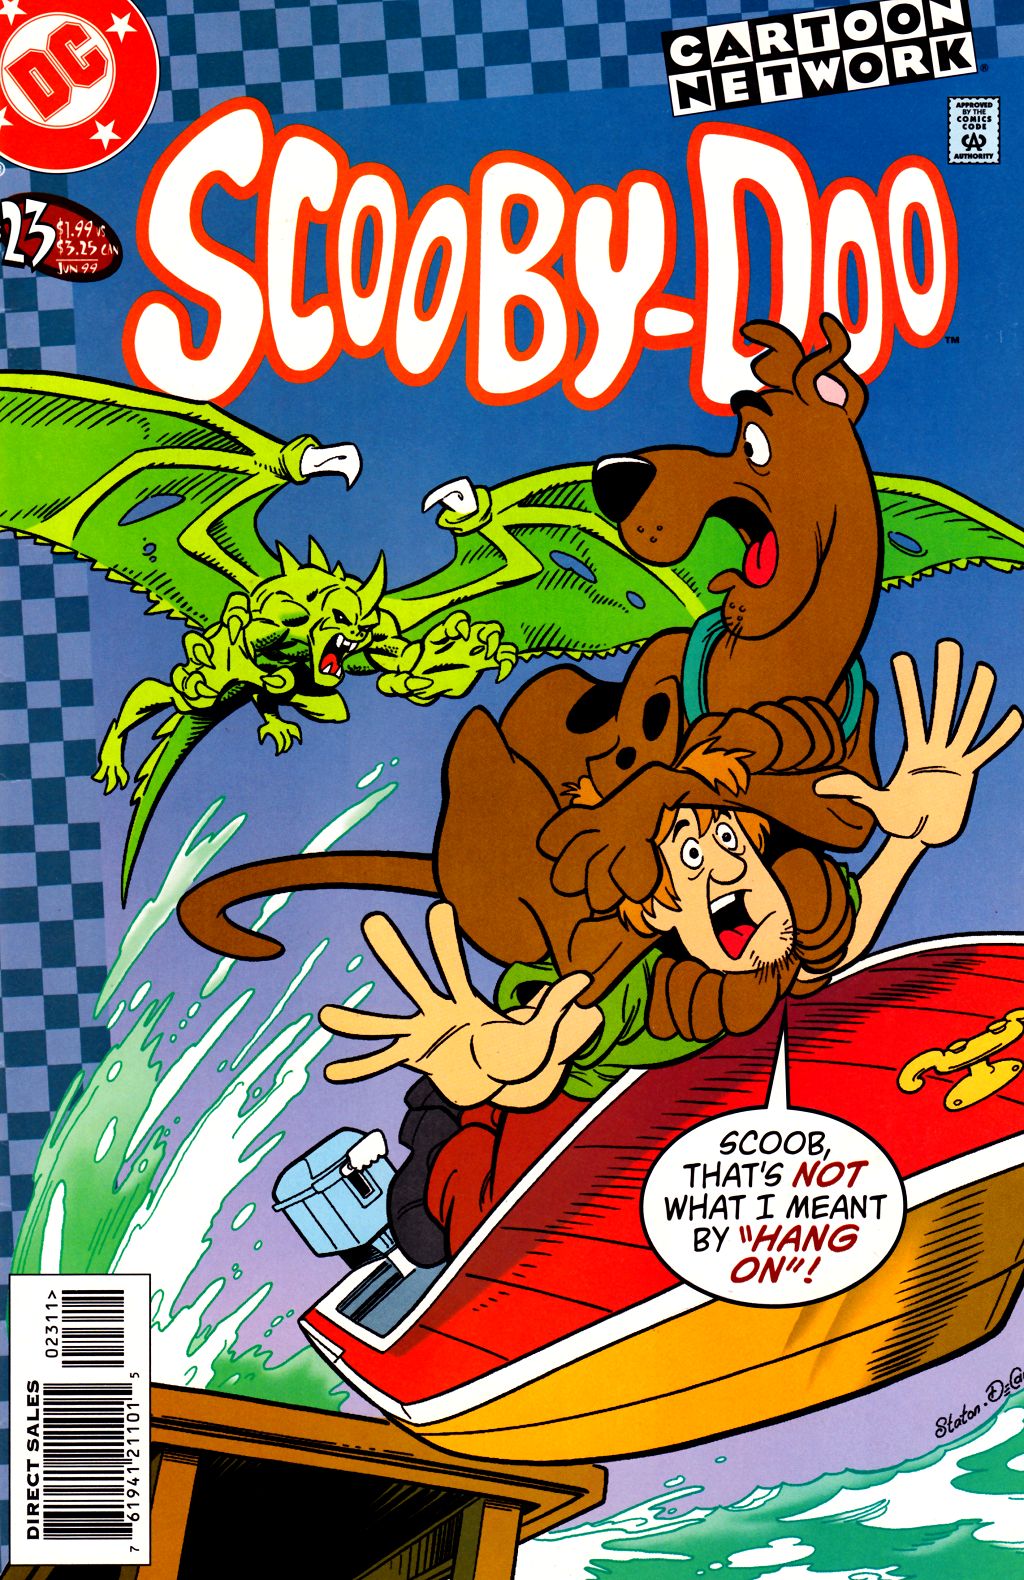 Scooby doo comics. Комикс Скуби Ду. Классические комиксы Скуби-Ду.